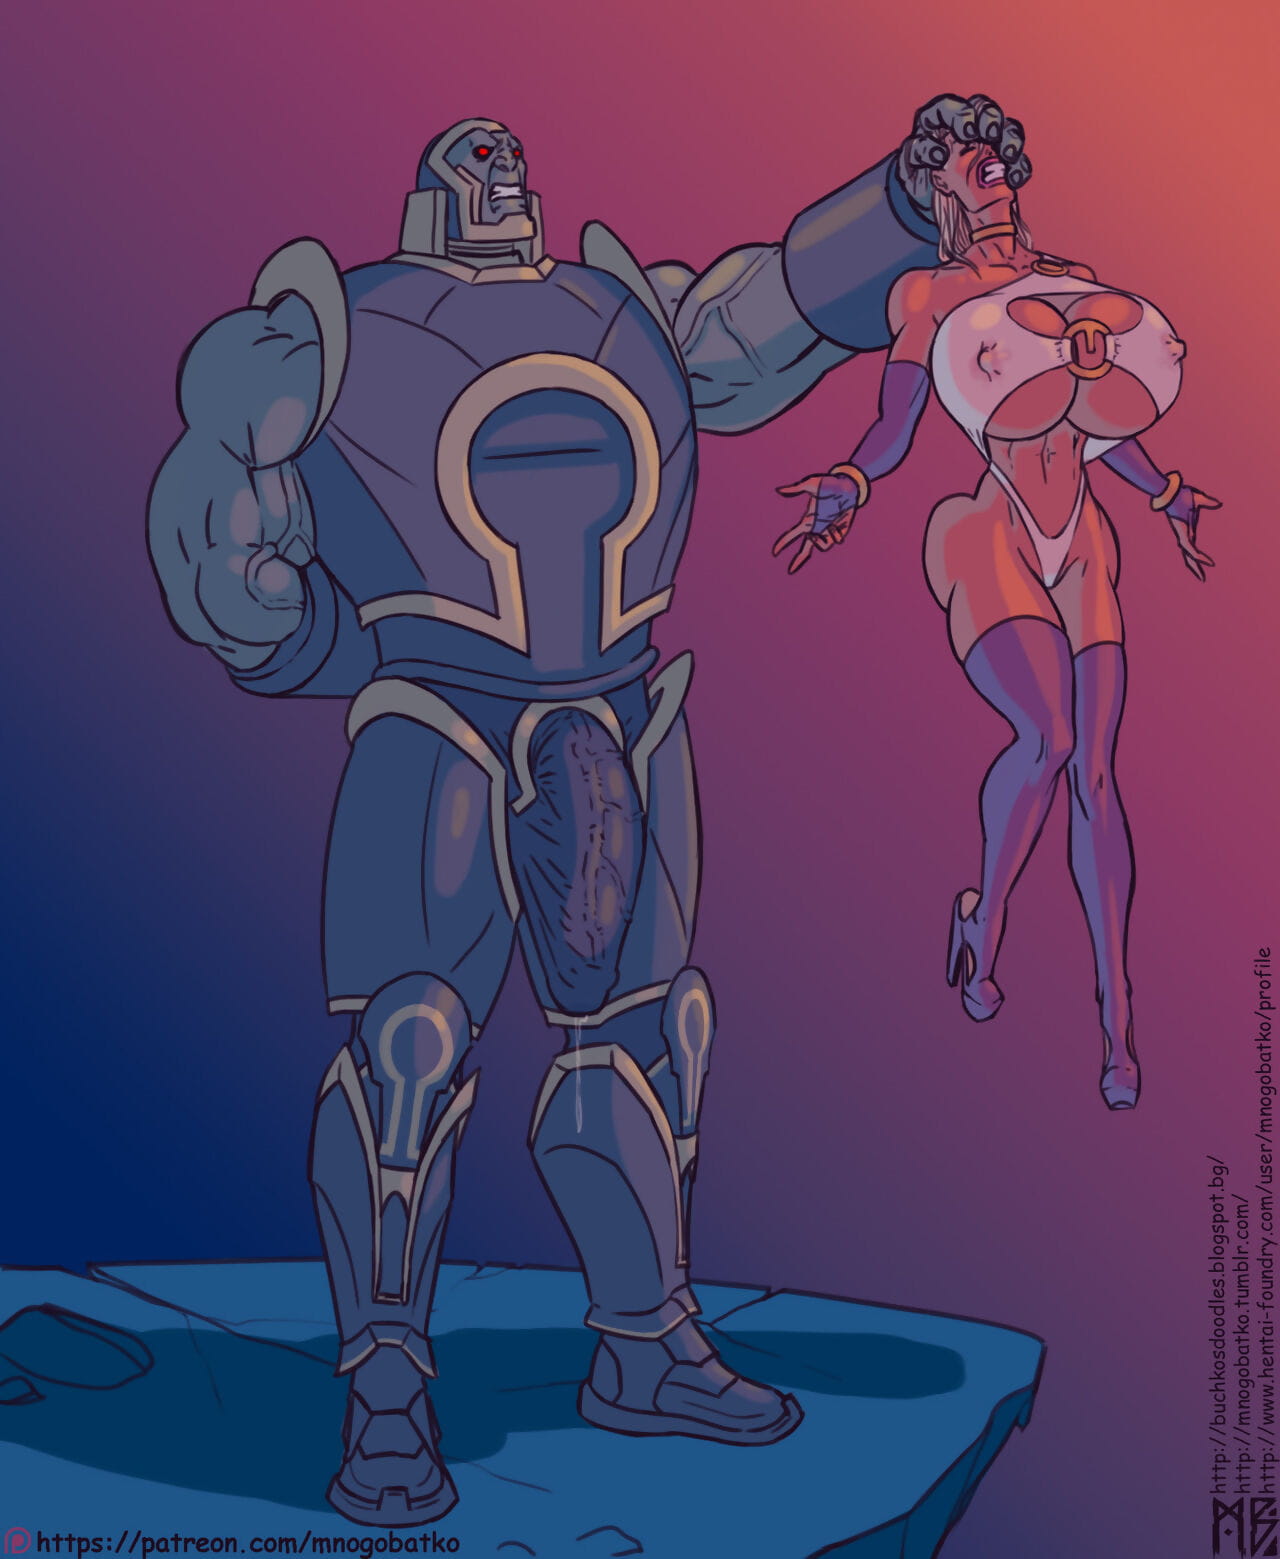 Mnogobatko- Darkseid vs Powergirl The Ultimatium page 1